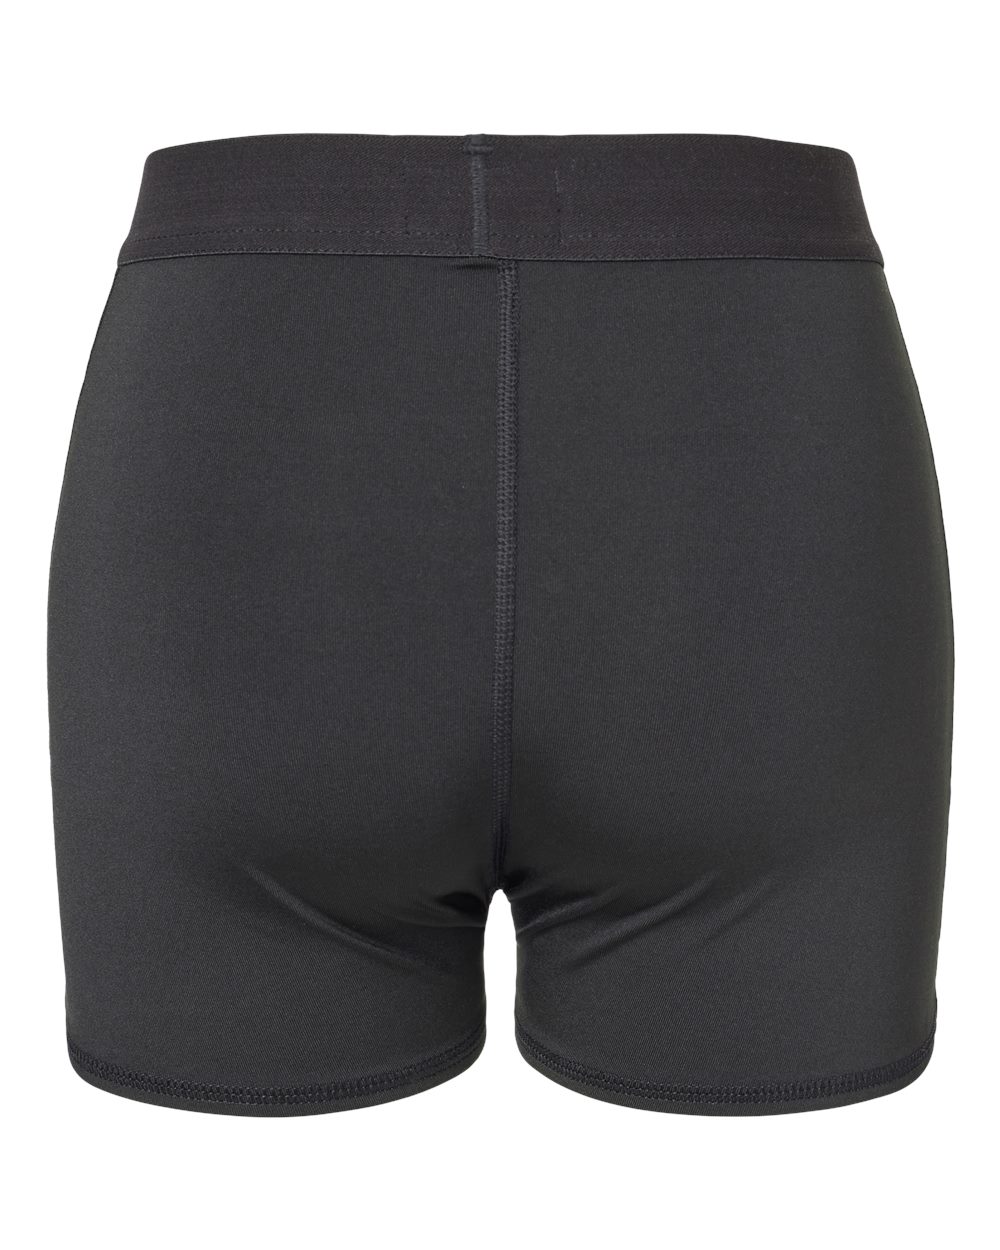 Women's Black 3 Compression Shorts